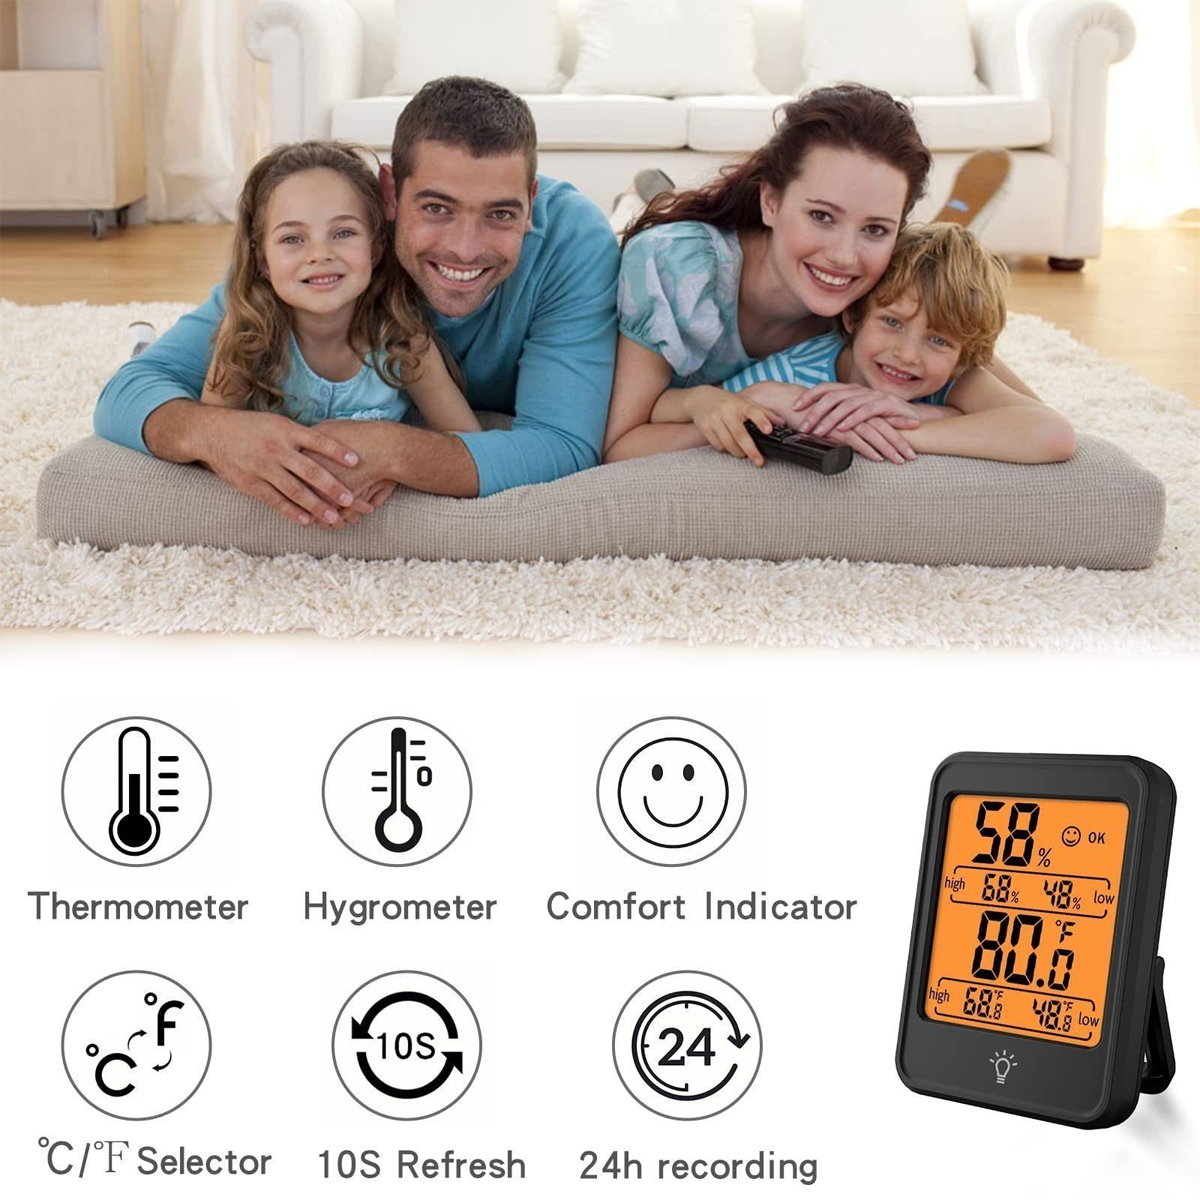 BABY Thermometer,Hygrometer Digitales Raumthermometer mit Hygrothermometer Hintergrundbeleuchtung JA Innen,Display